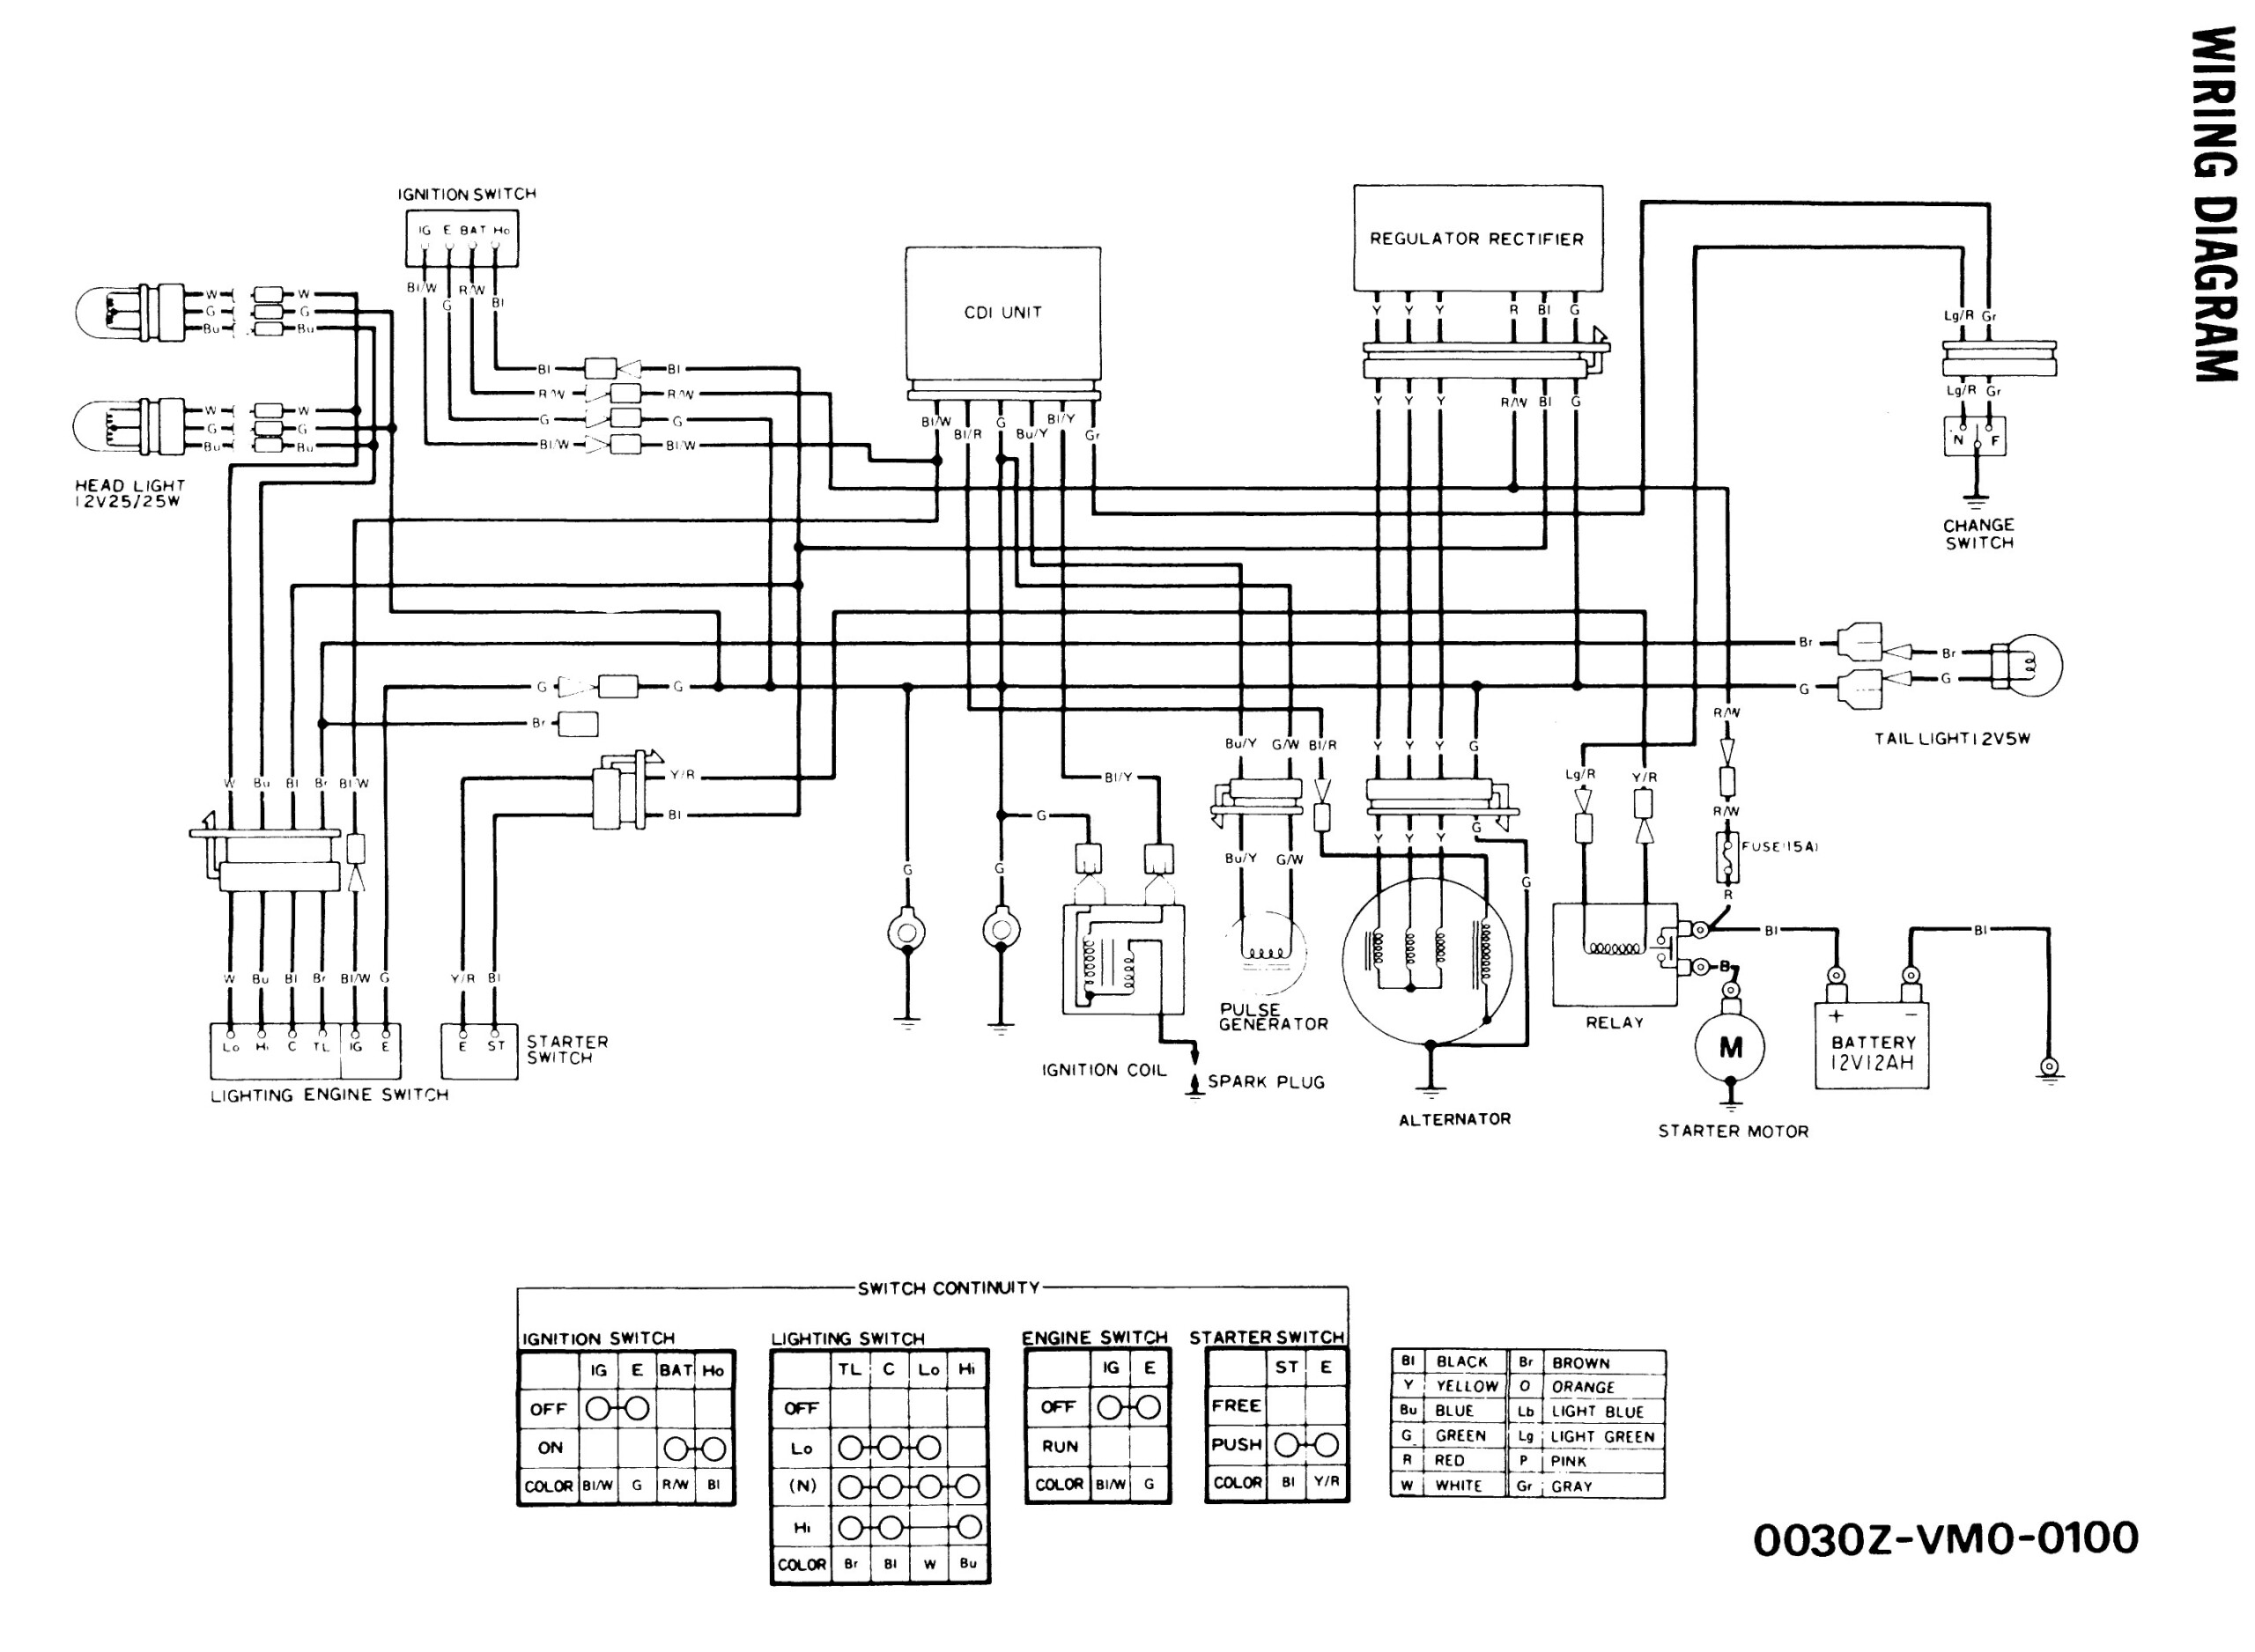 DIAGRAM Honda Odyssey Wiring Diagrams FULL Version HD Quality Wiring